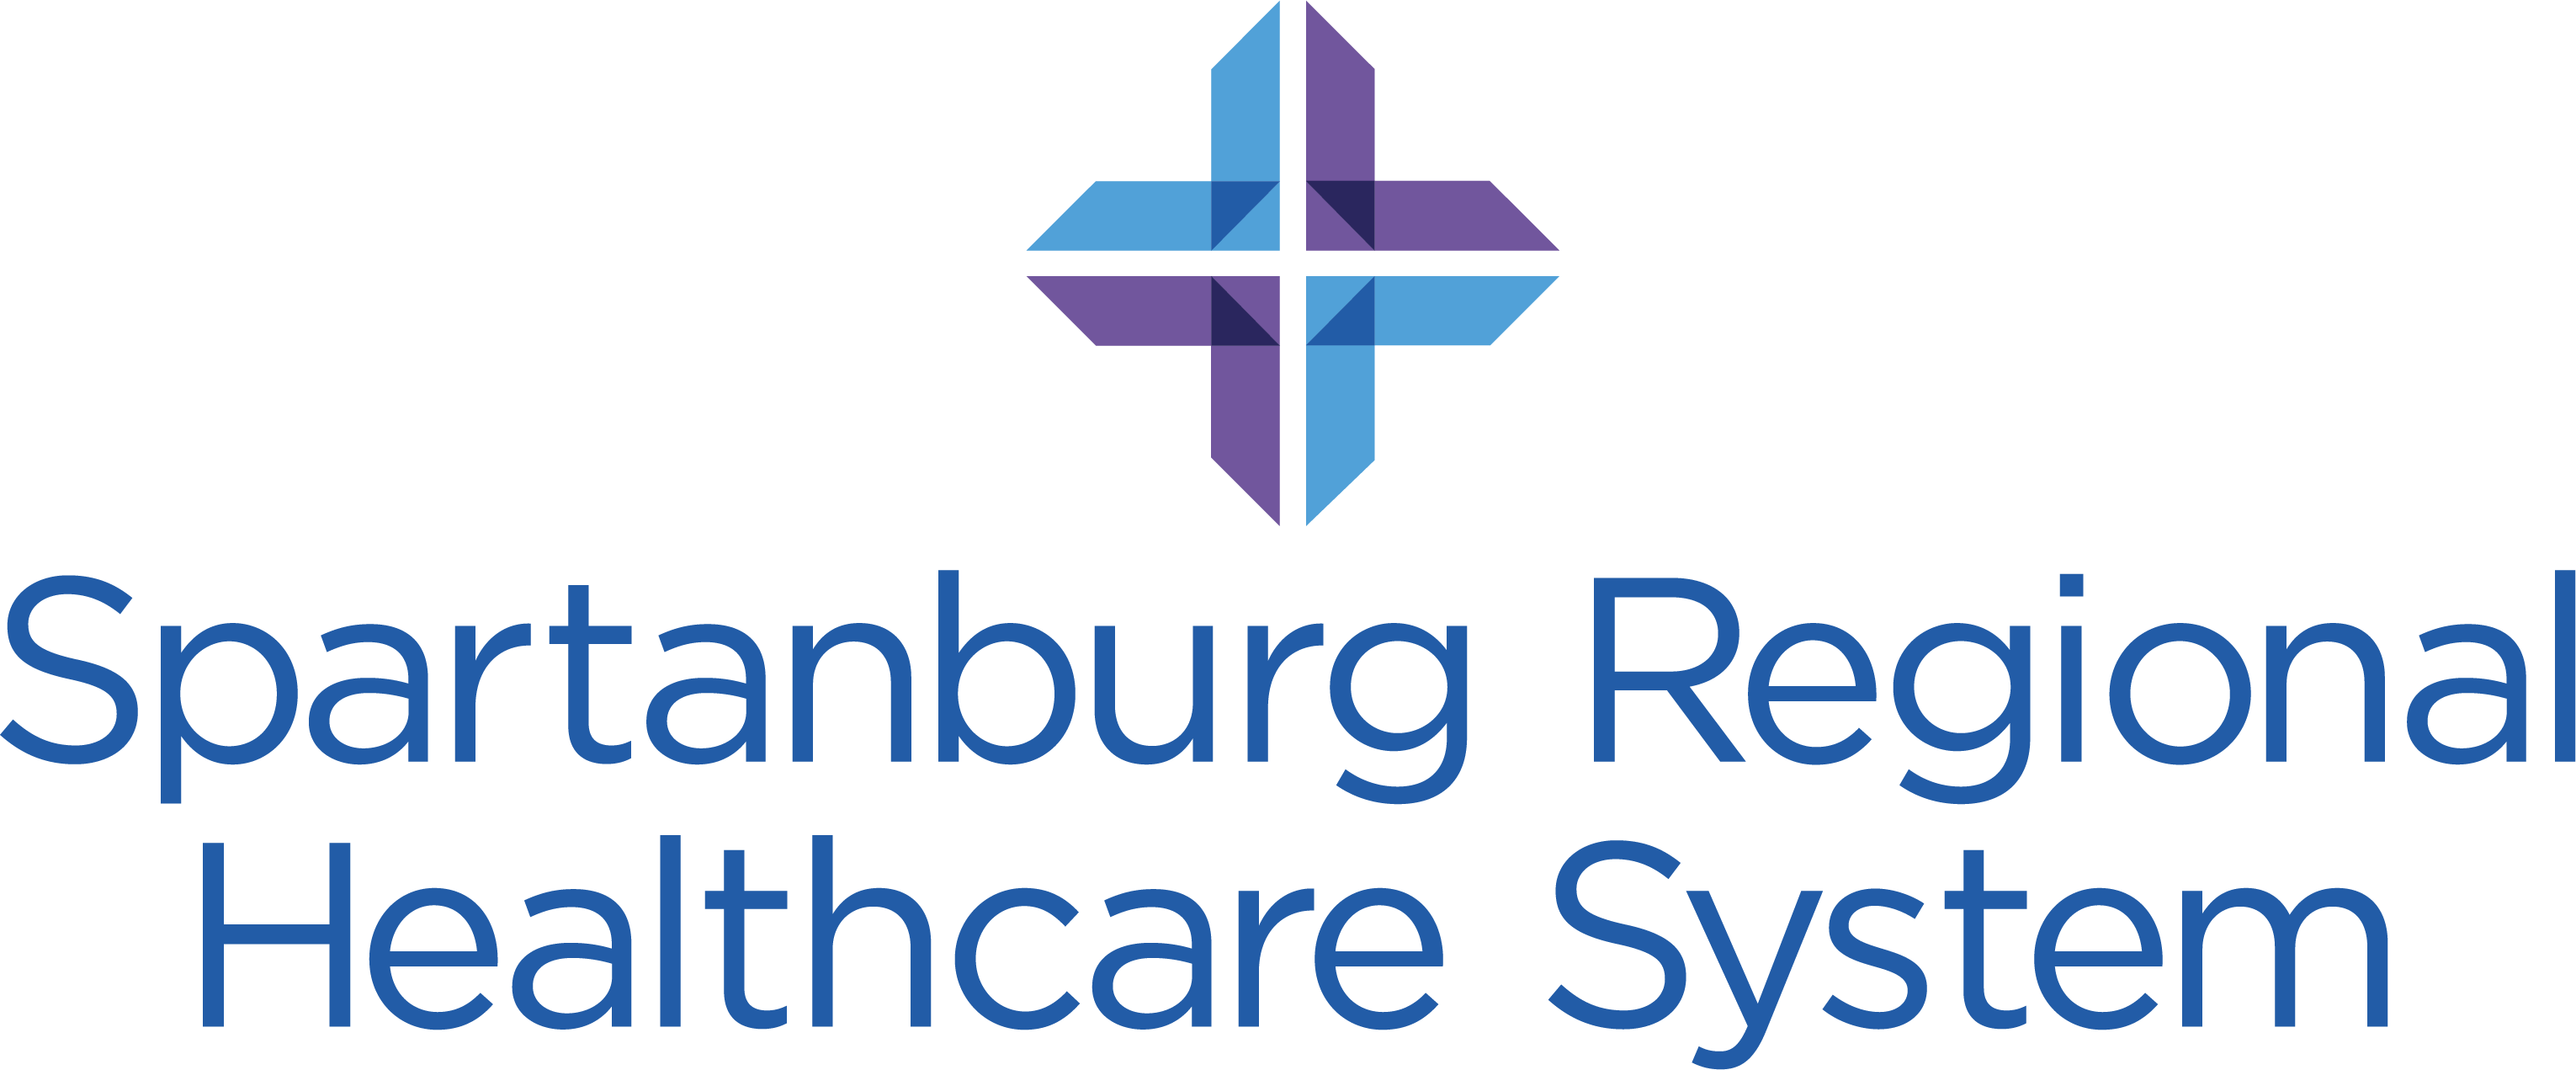 Spartanburg Regional Healthcare System logo